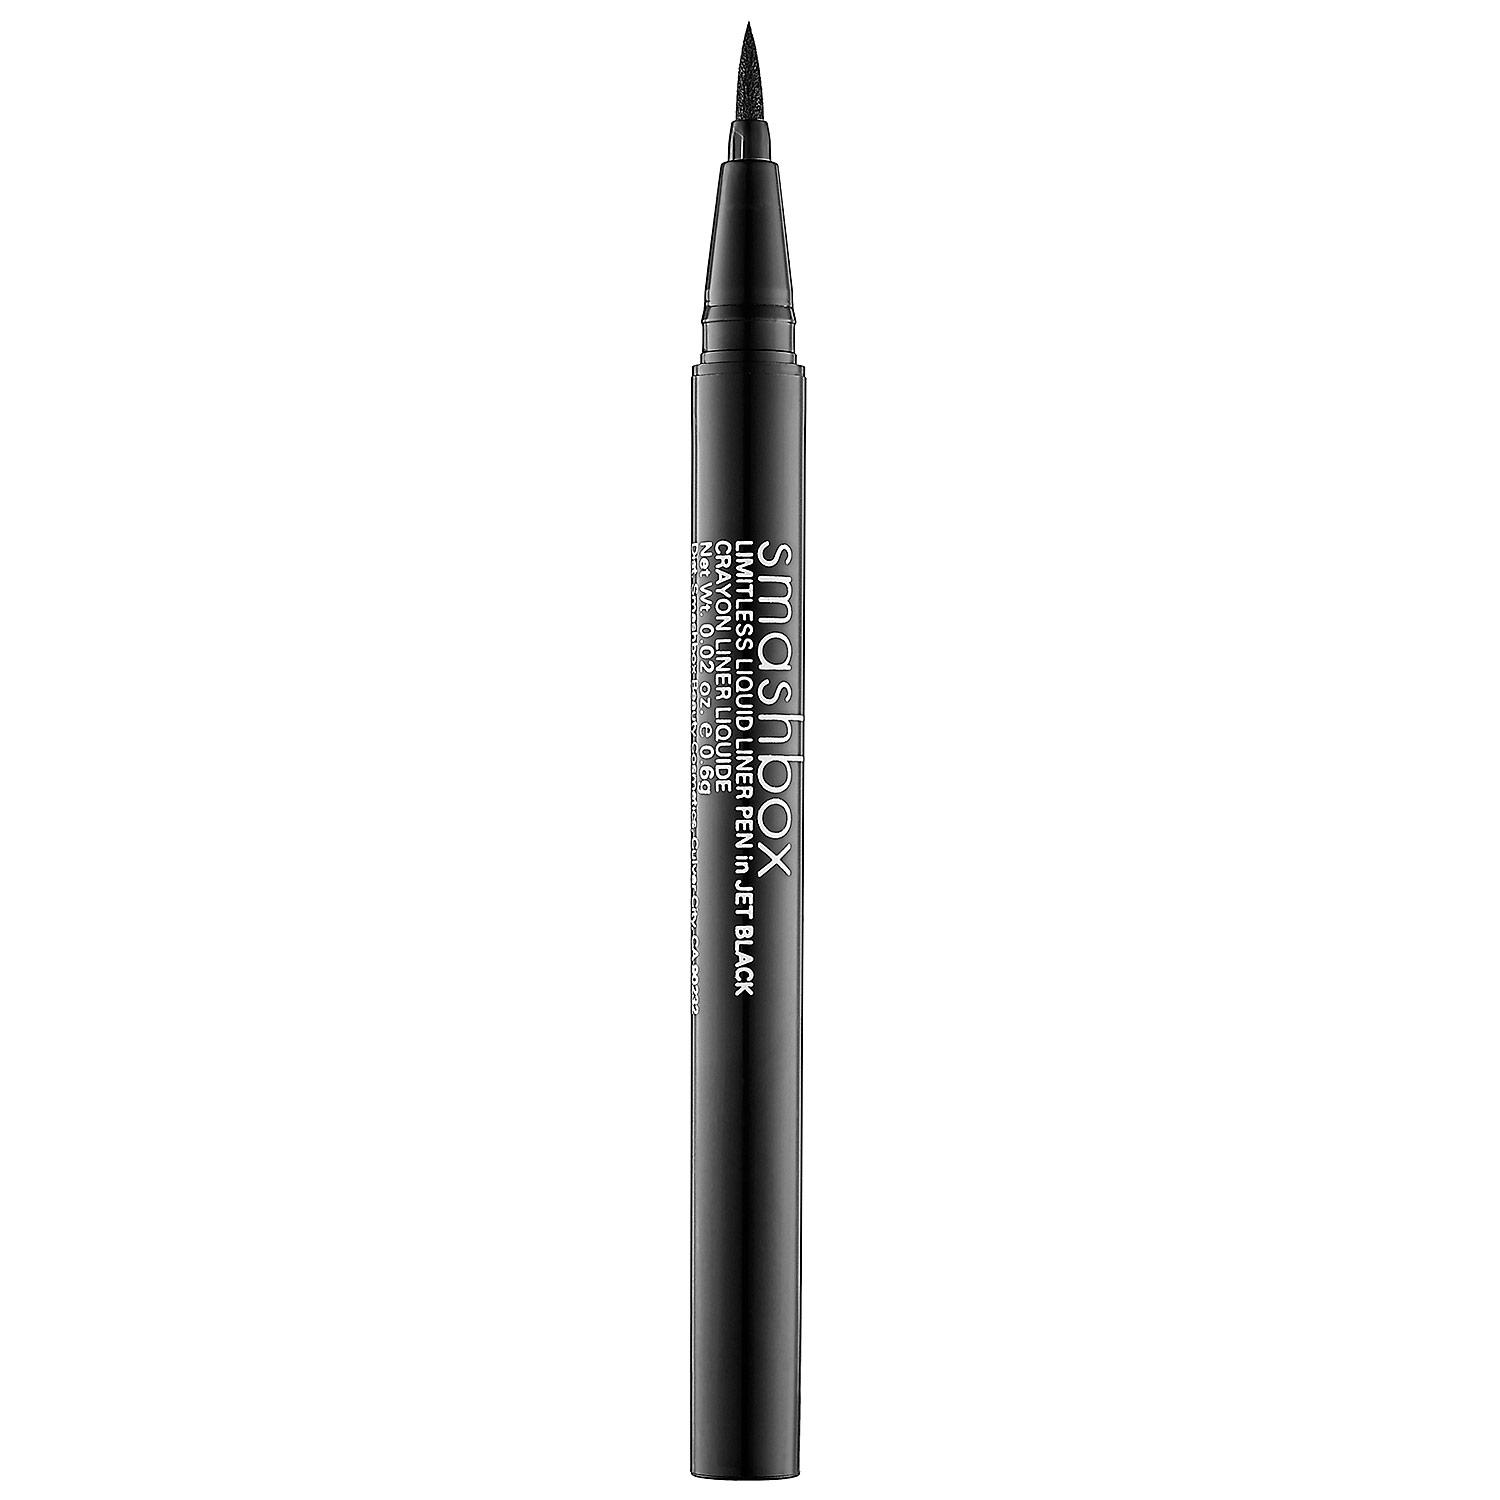 Smashbox Limitless Liquid Liner Pen Jet Black